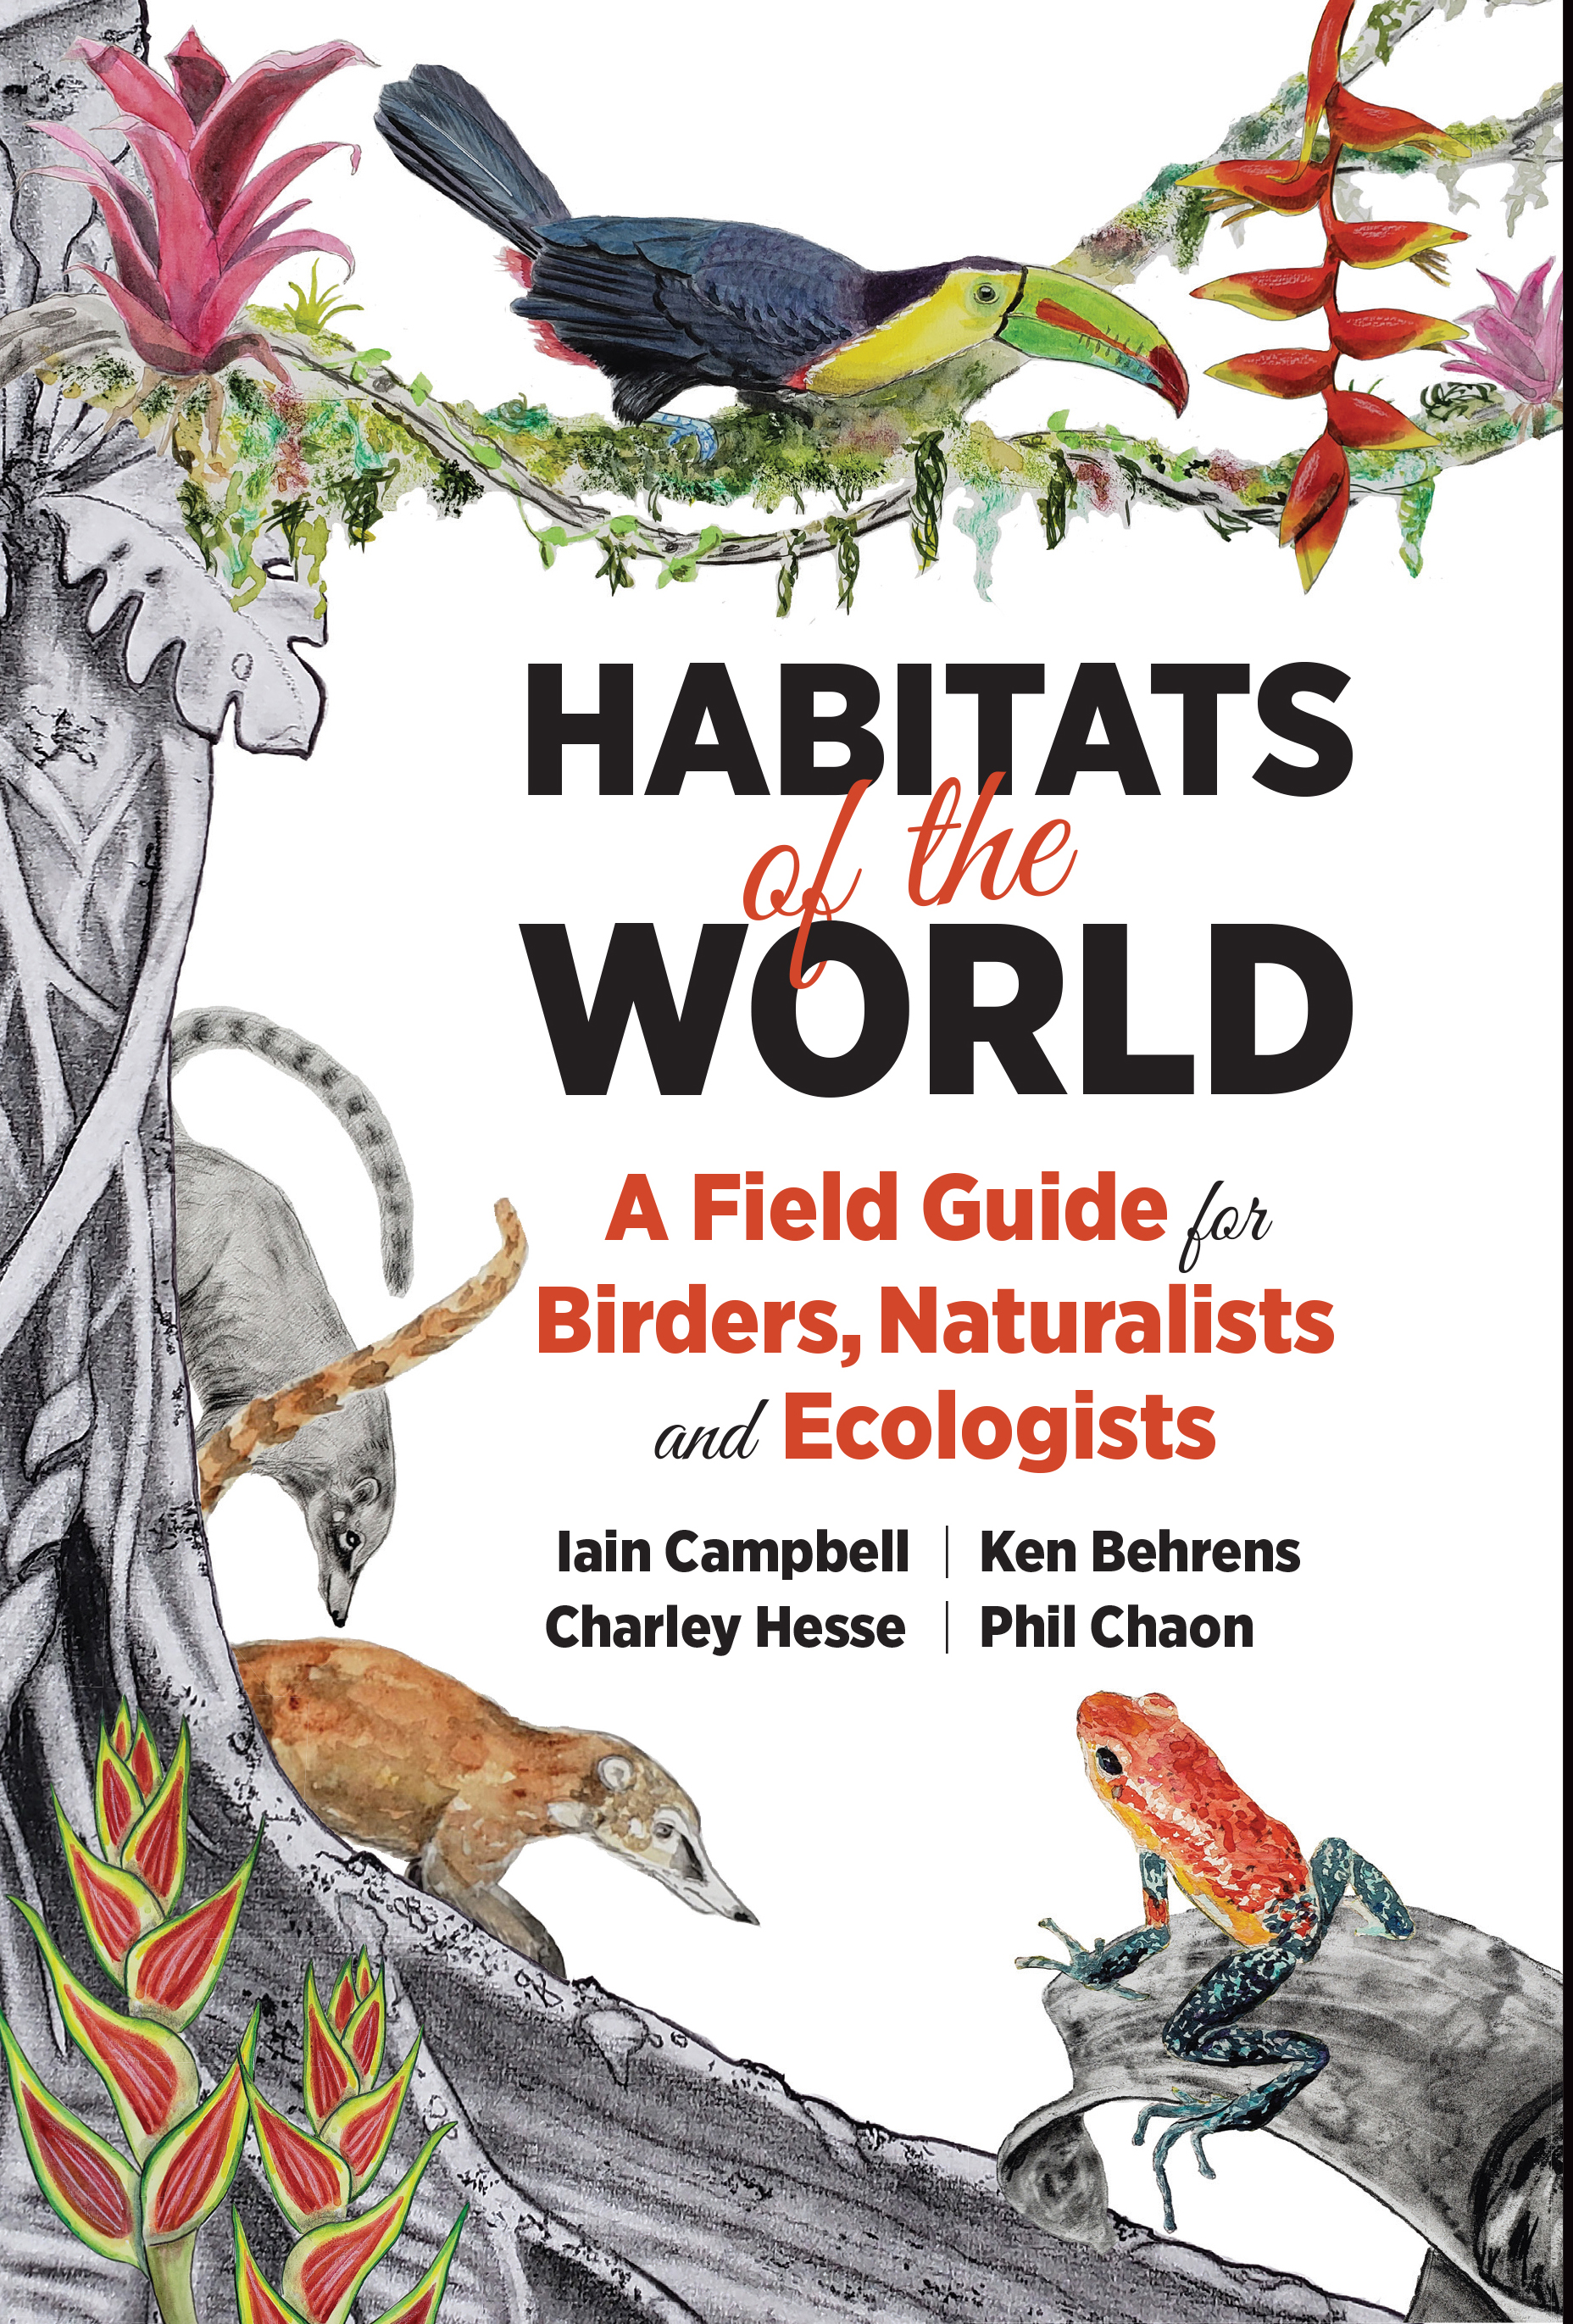 Habitats book cover.jpg